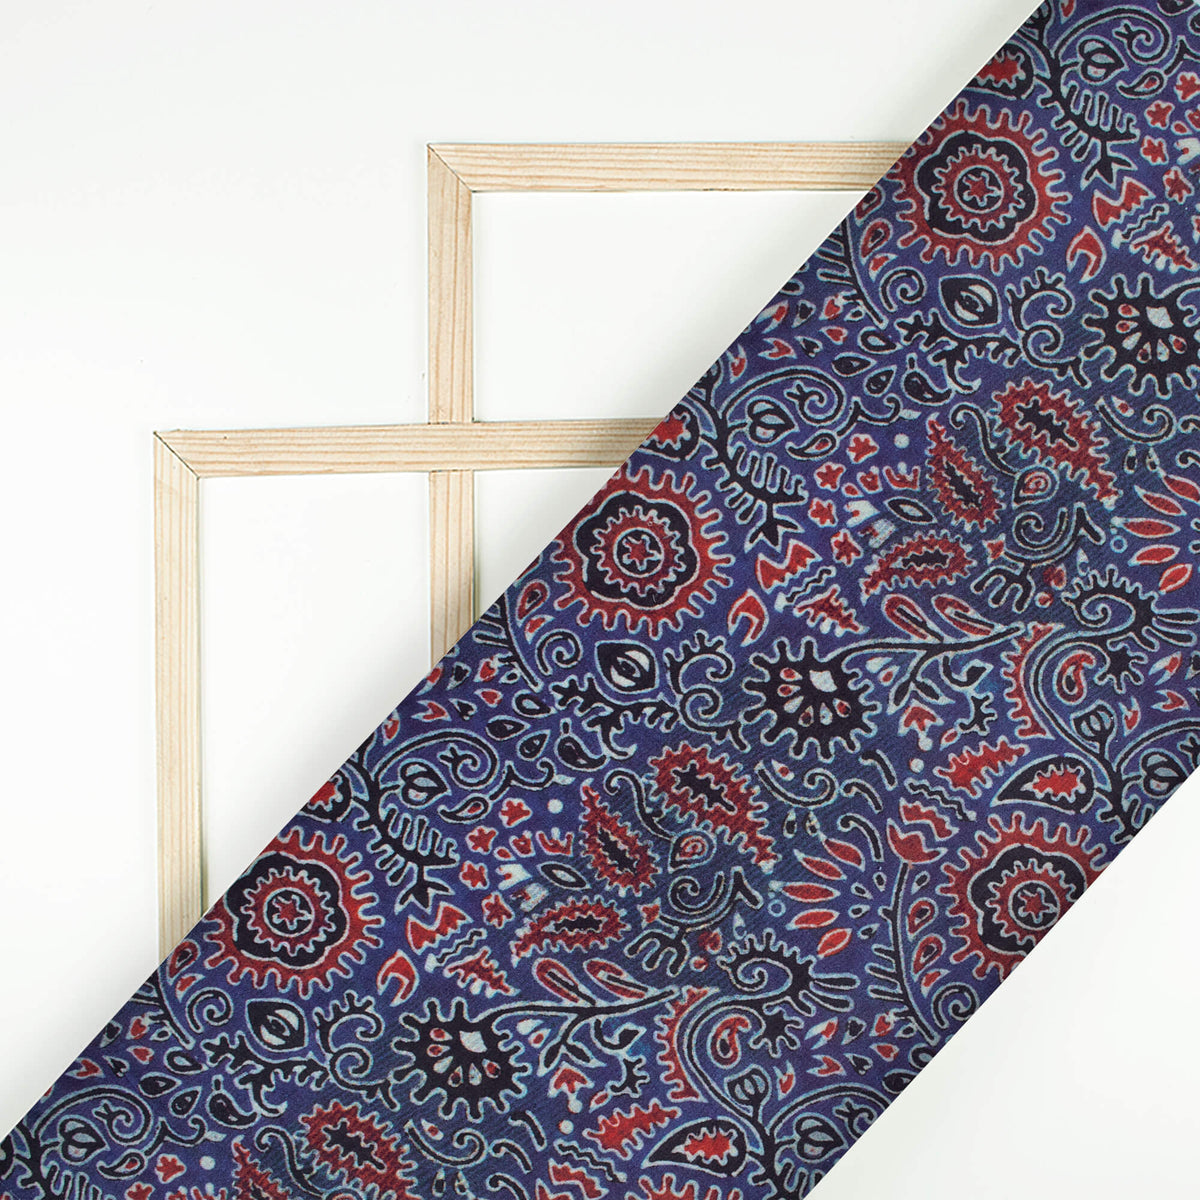 Aegean Blue And Maroon Ajrakh Pattern Digital Print Cotton Cambric Fabric